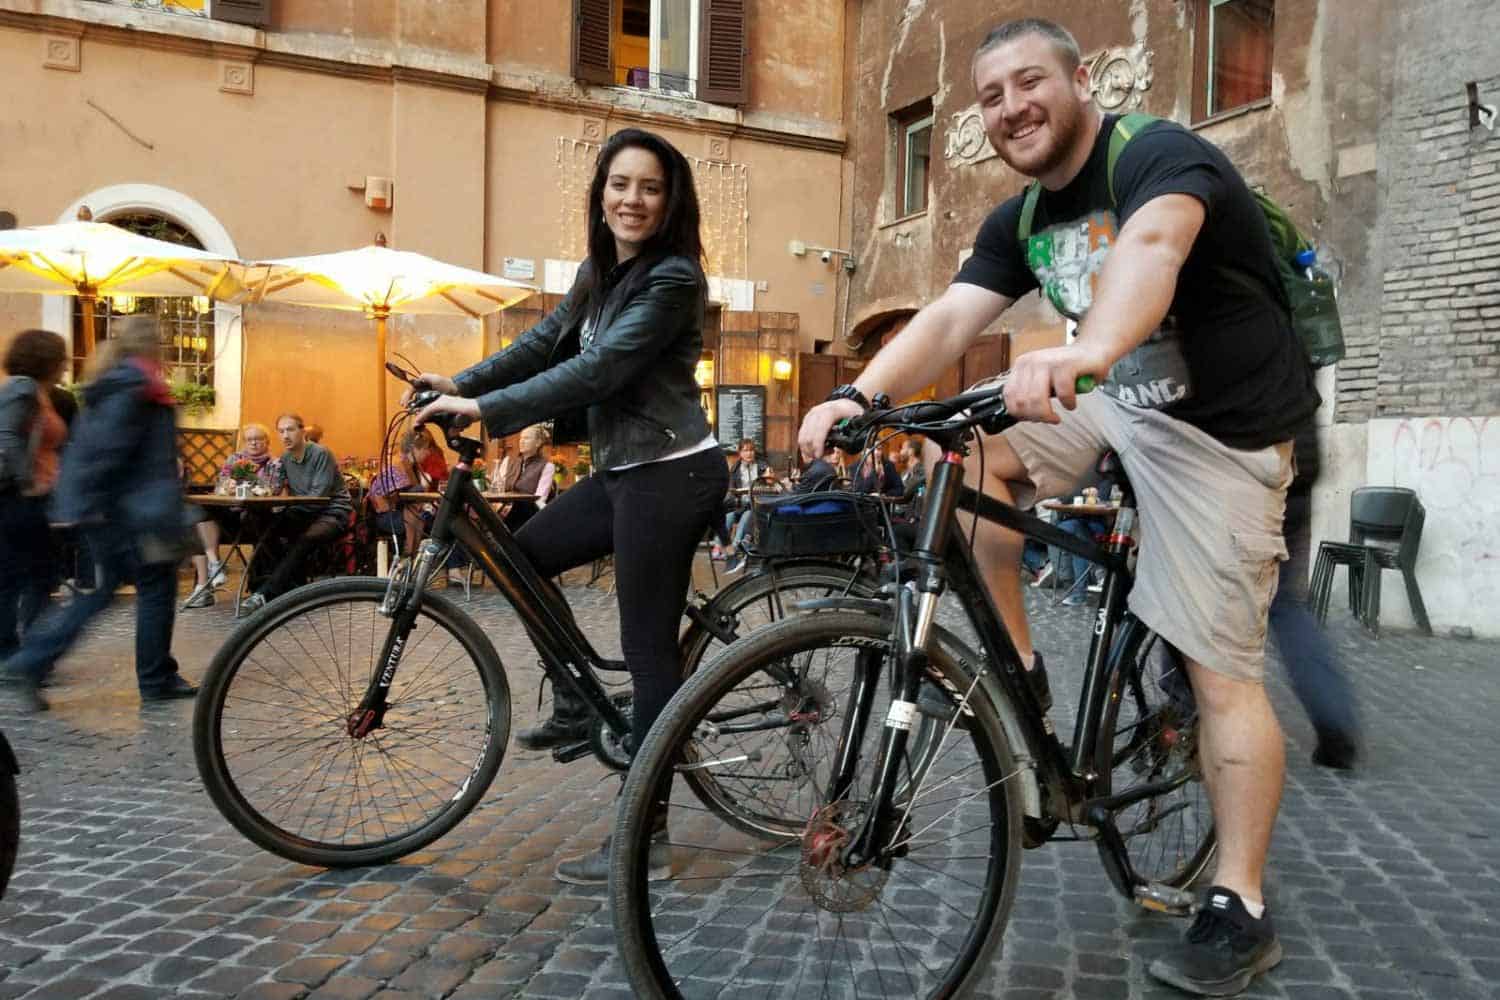 Capture the atmosphere of the Trastevere neighborhood by bike